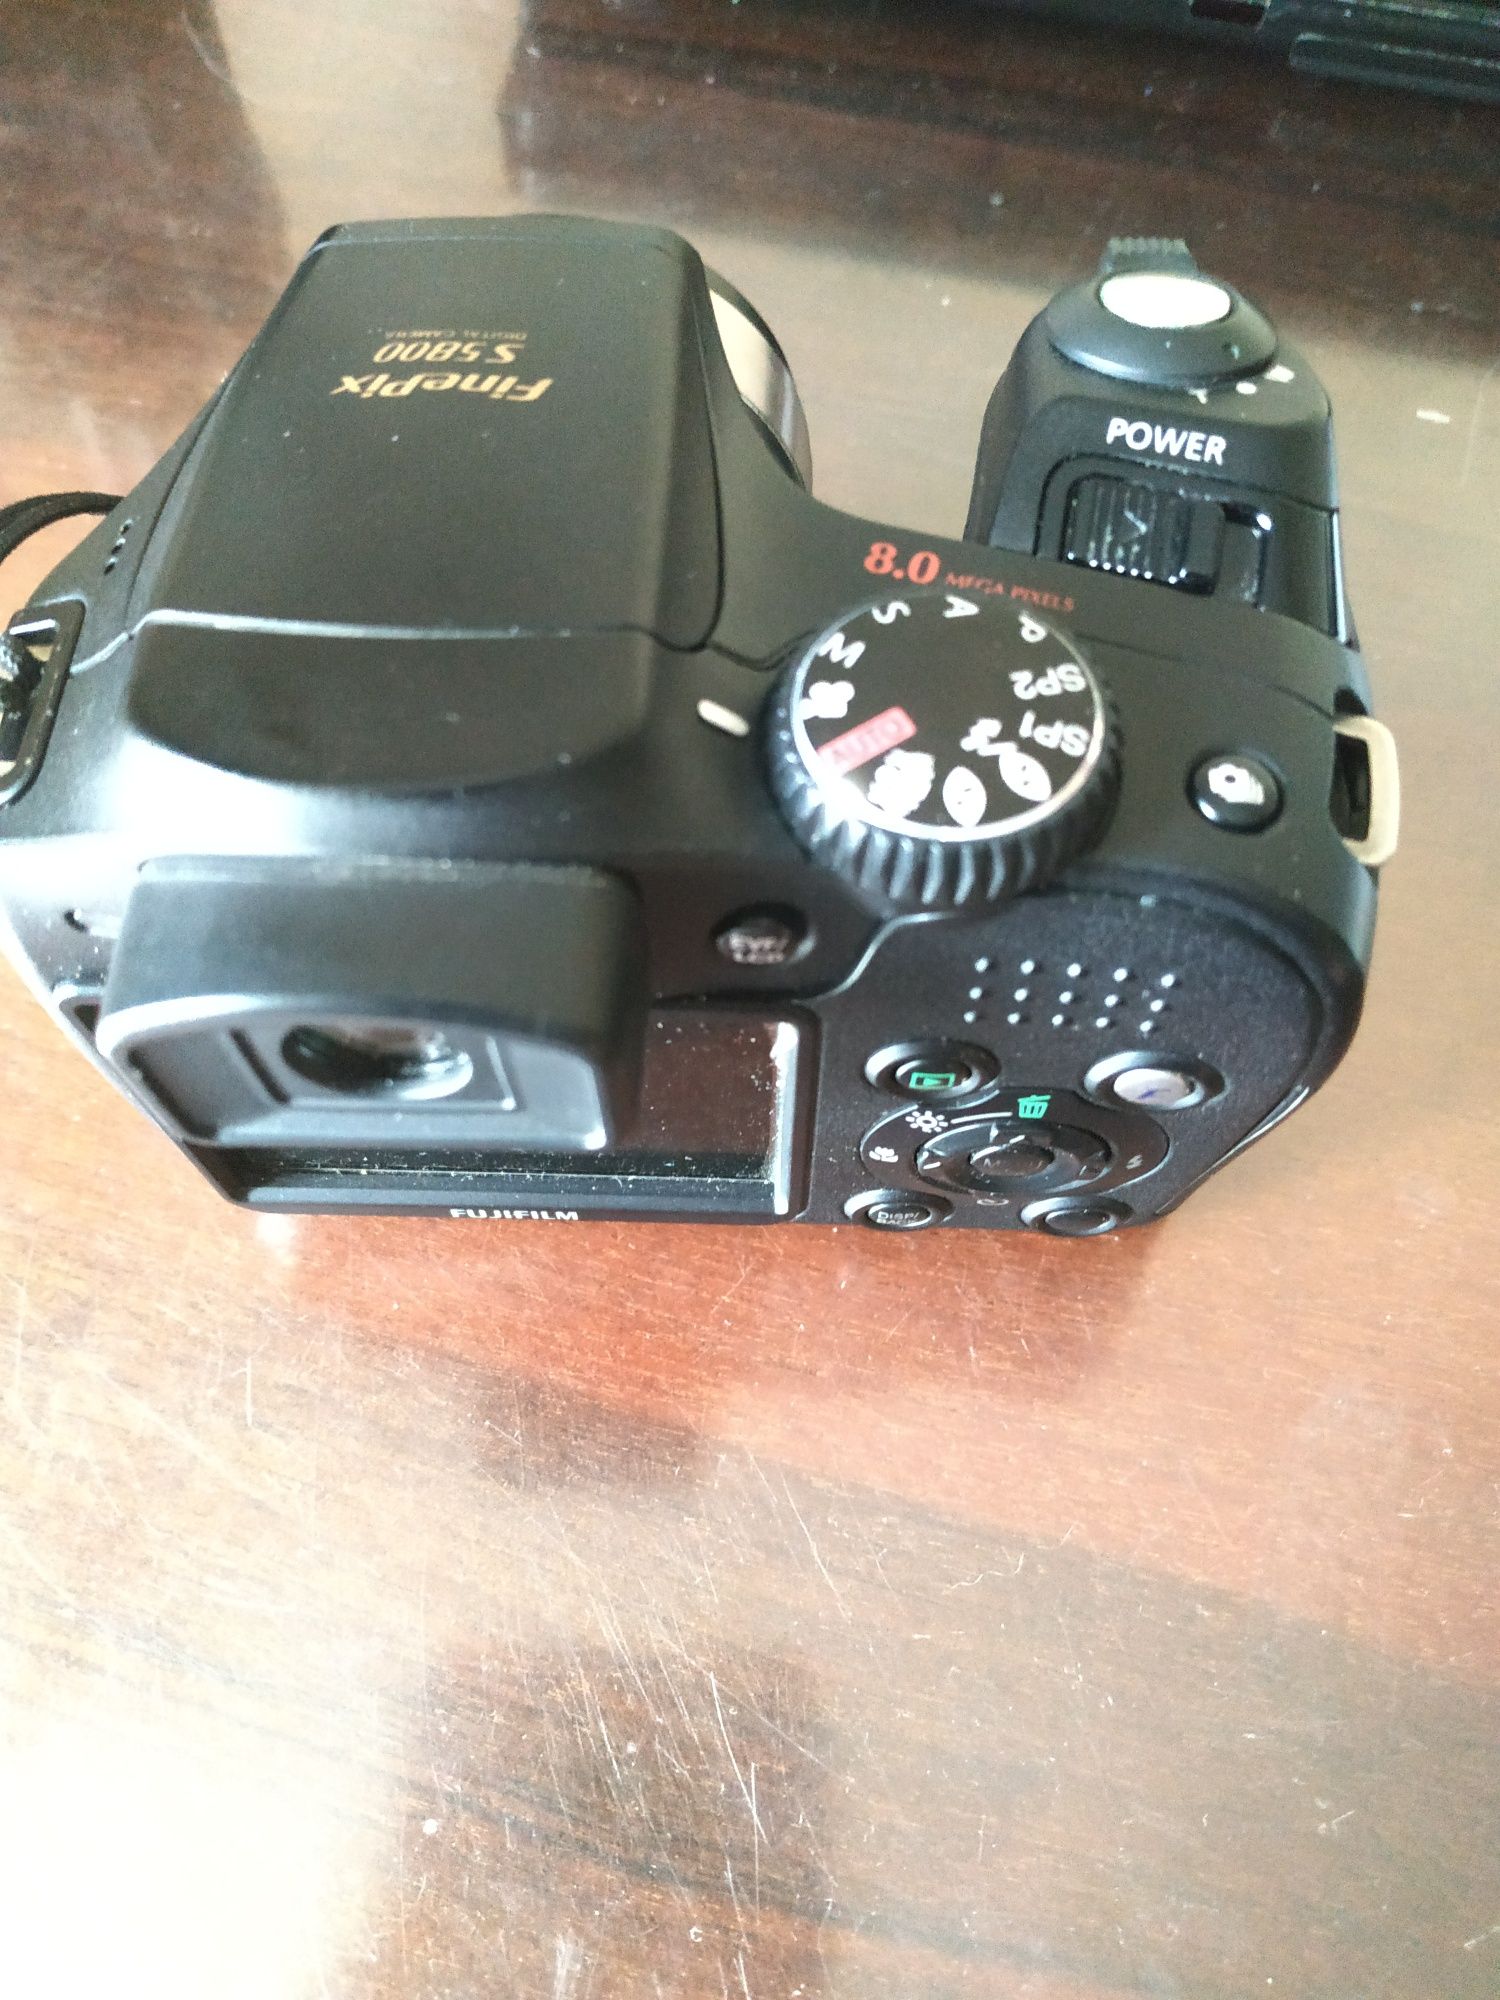 Фотоаппарат Fujifilm FinePix S 5800